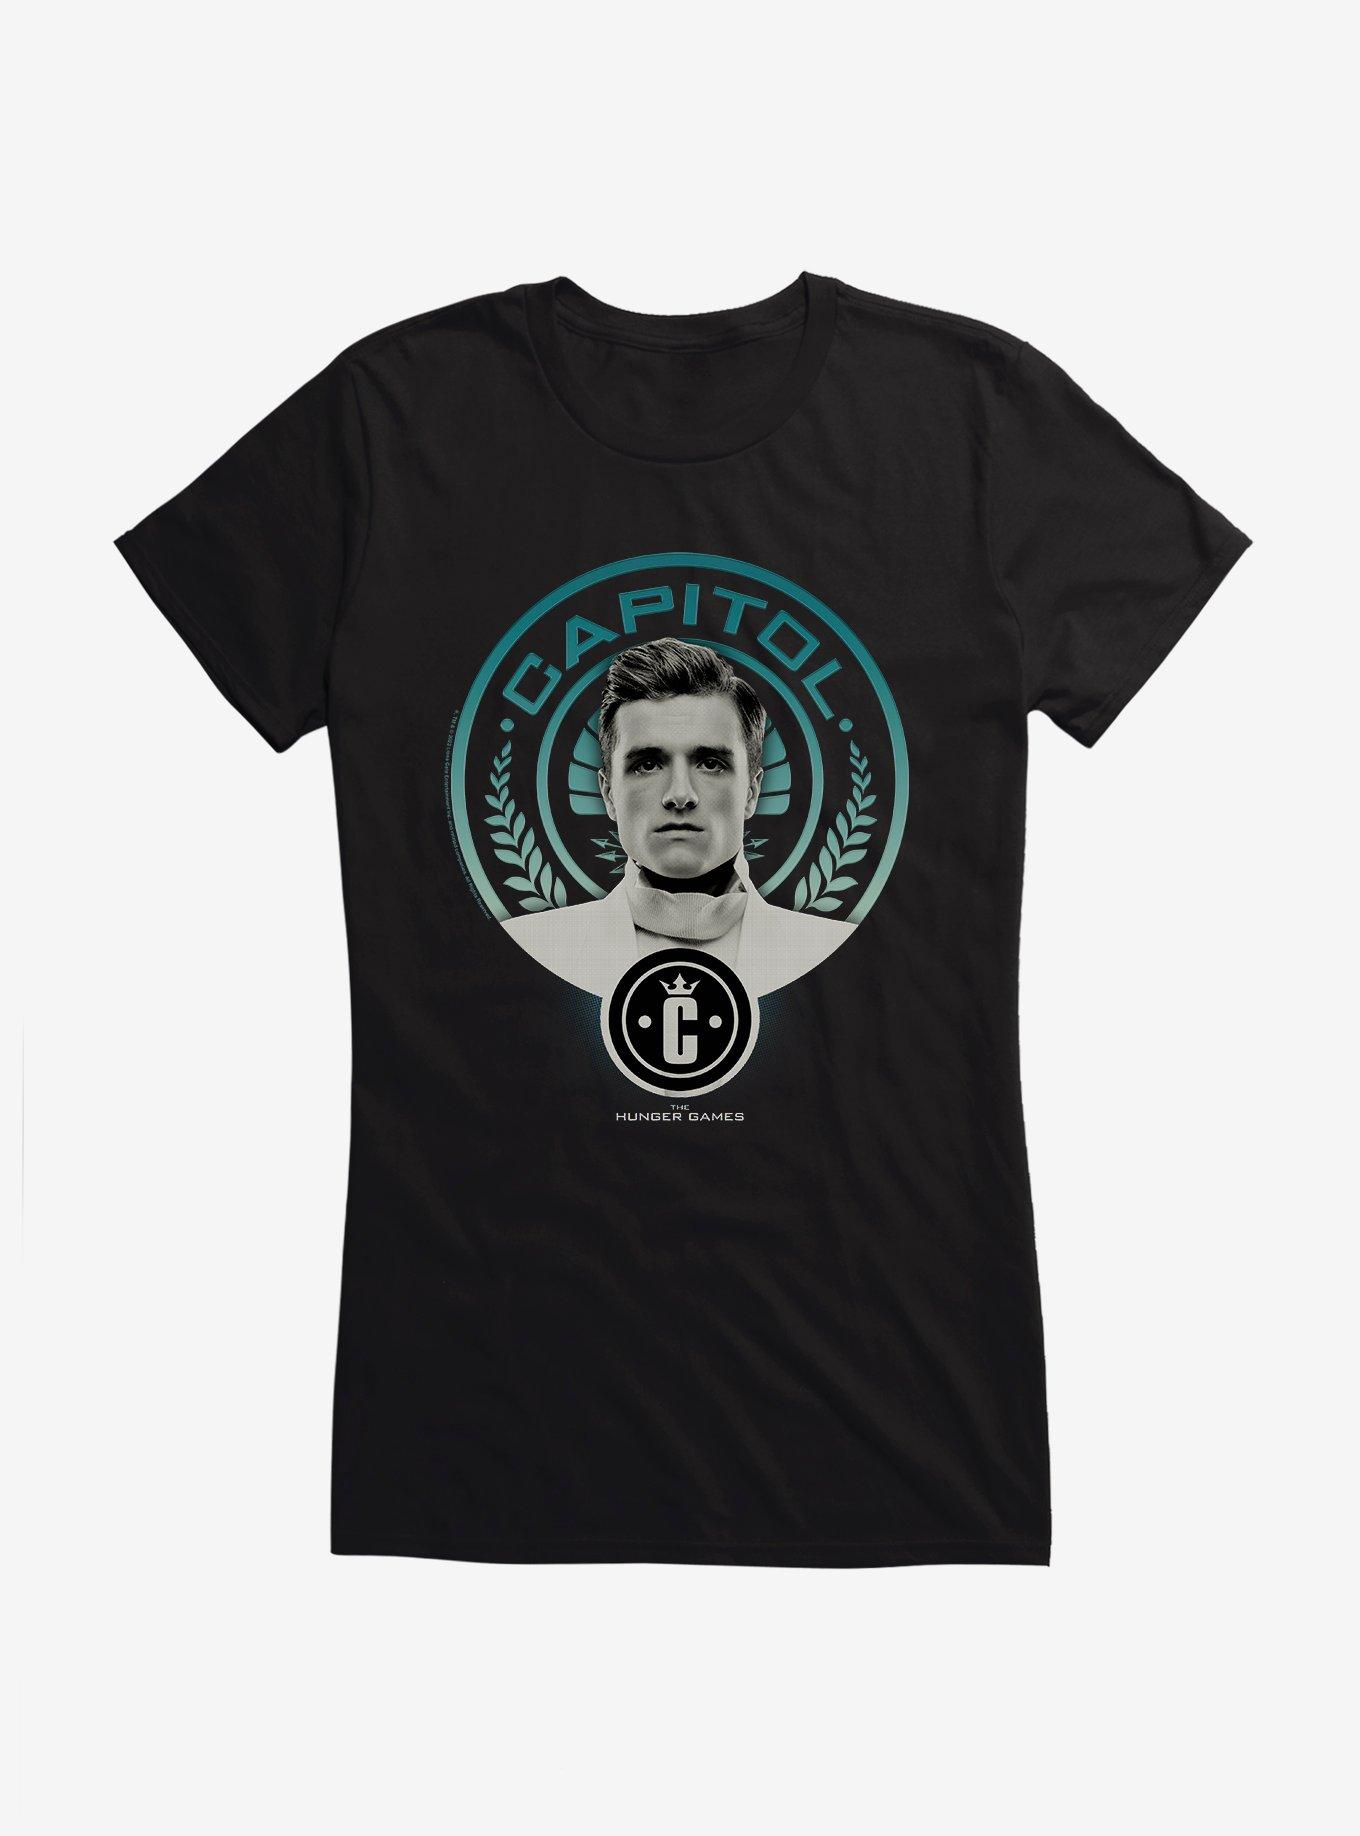 Hunger Games Peeta Mellark Capitol Girls T-Shirt